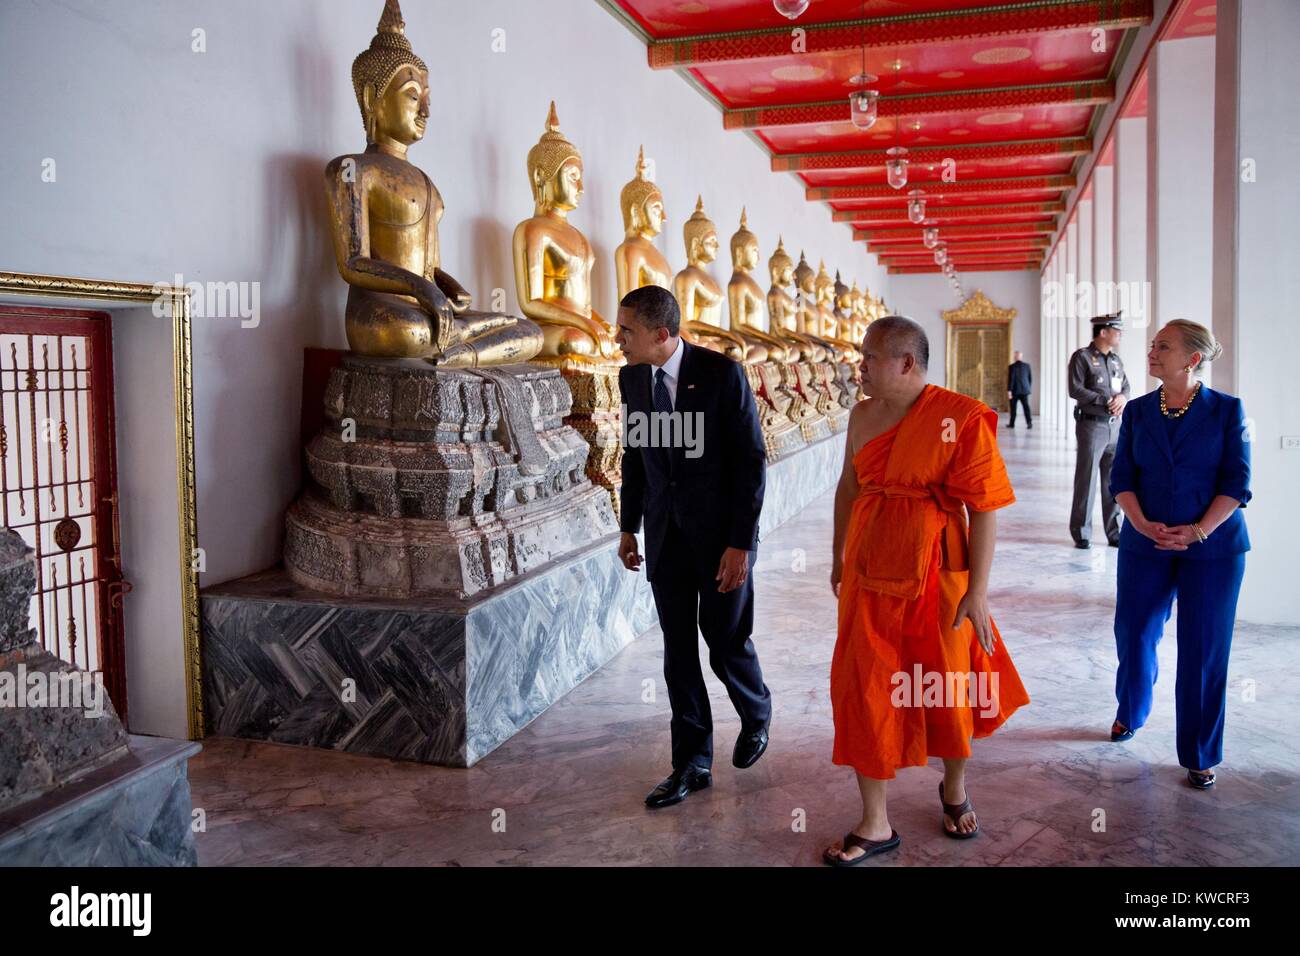 President Barack Obama and Secretary Hillary Clinton tour Wat Pho Royal Monastery. Chaokun Suthee Thammanuwat is their guide. Bangkok, Thailand, Nov. 18, 2012. (BSLOC 2015 3 207) Stock Photo